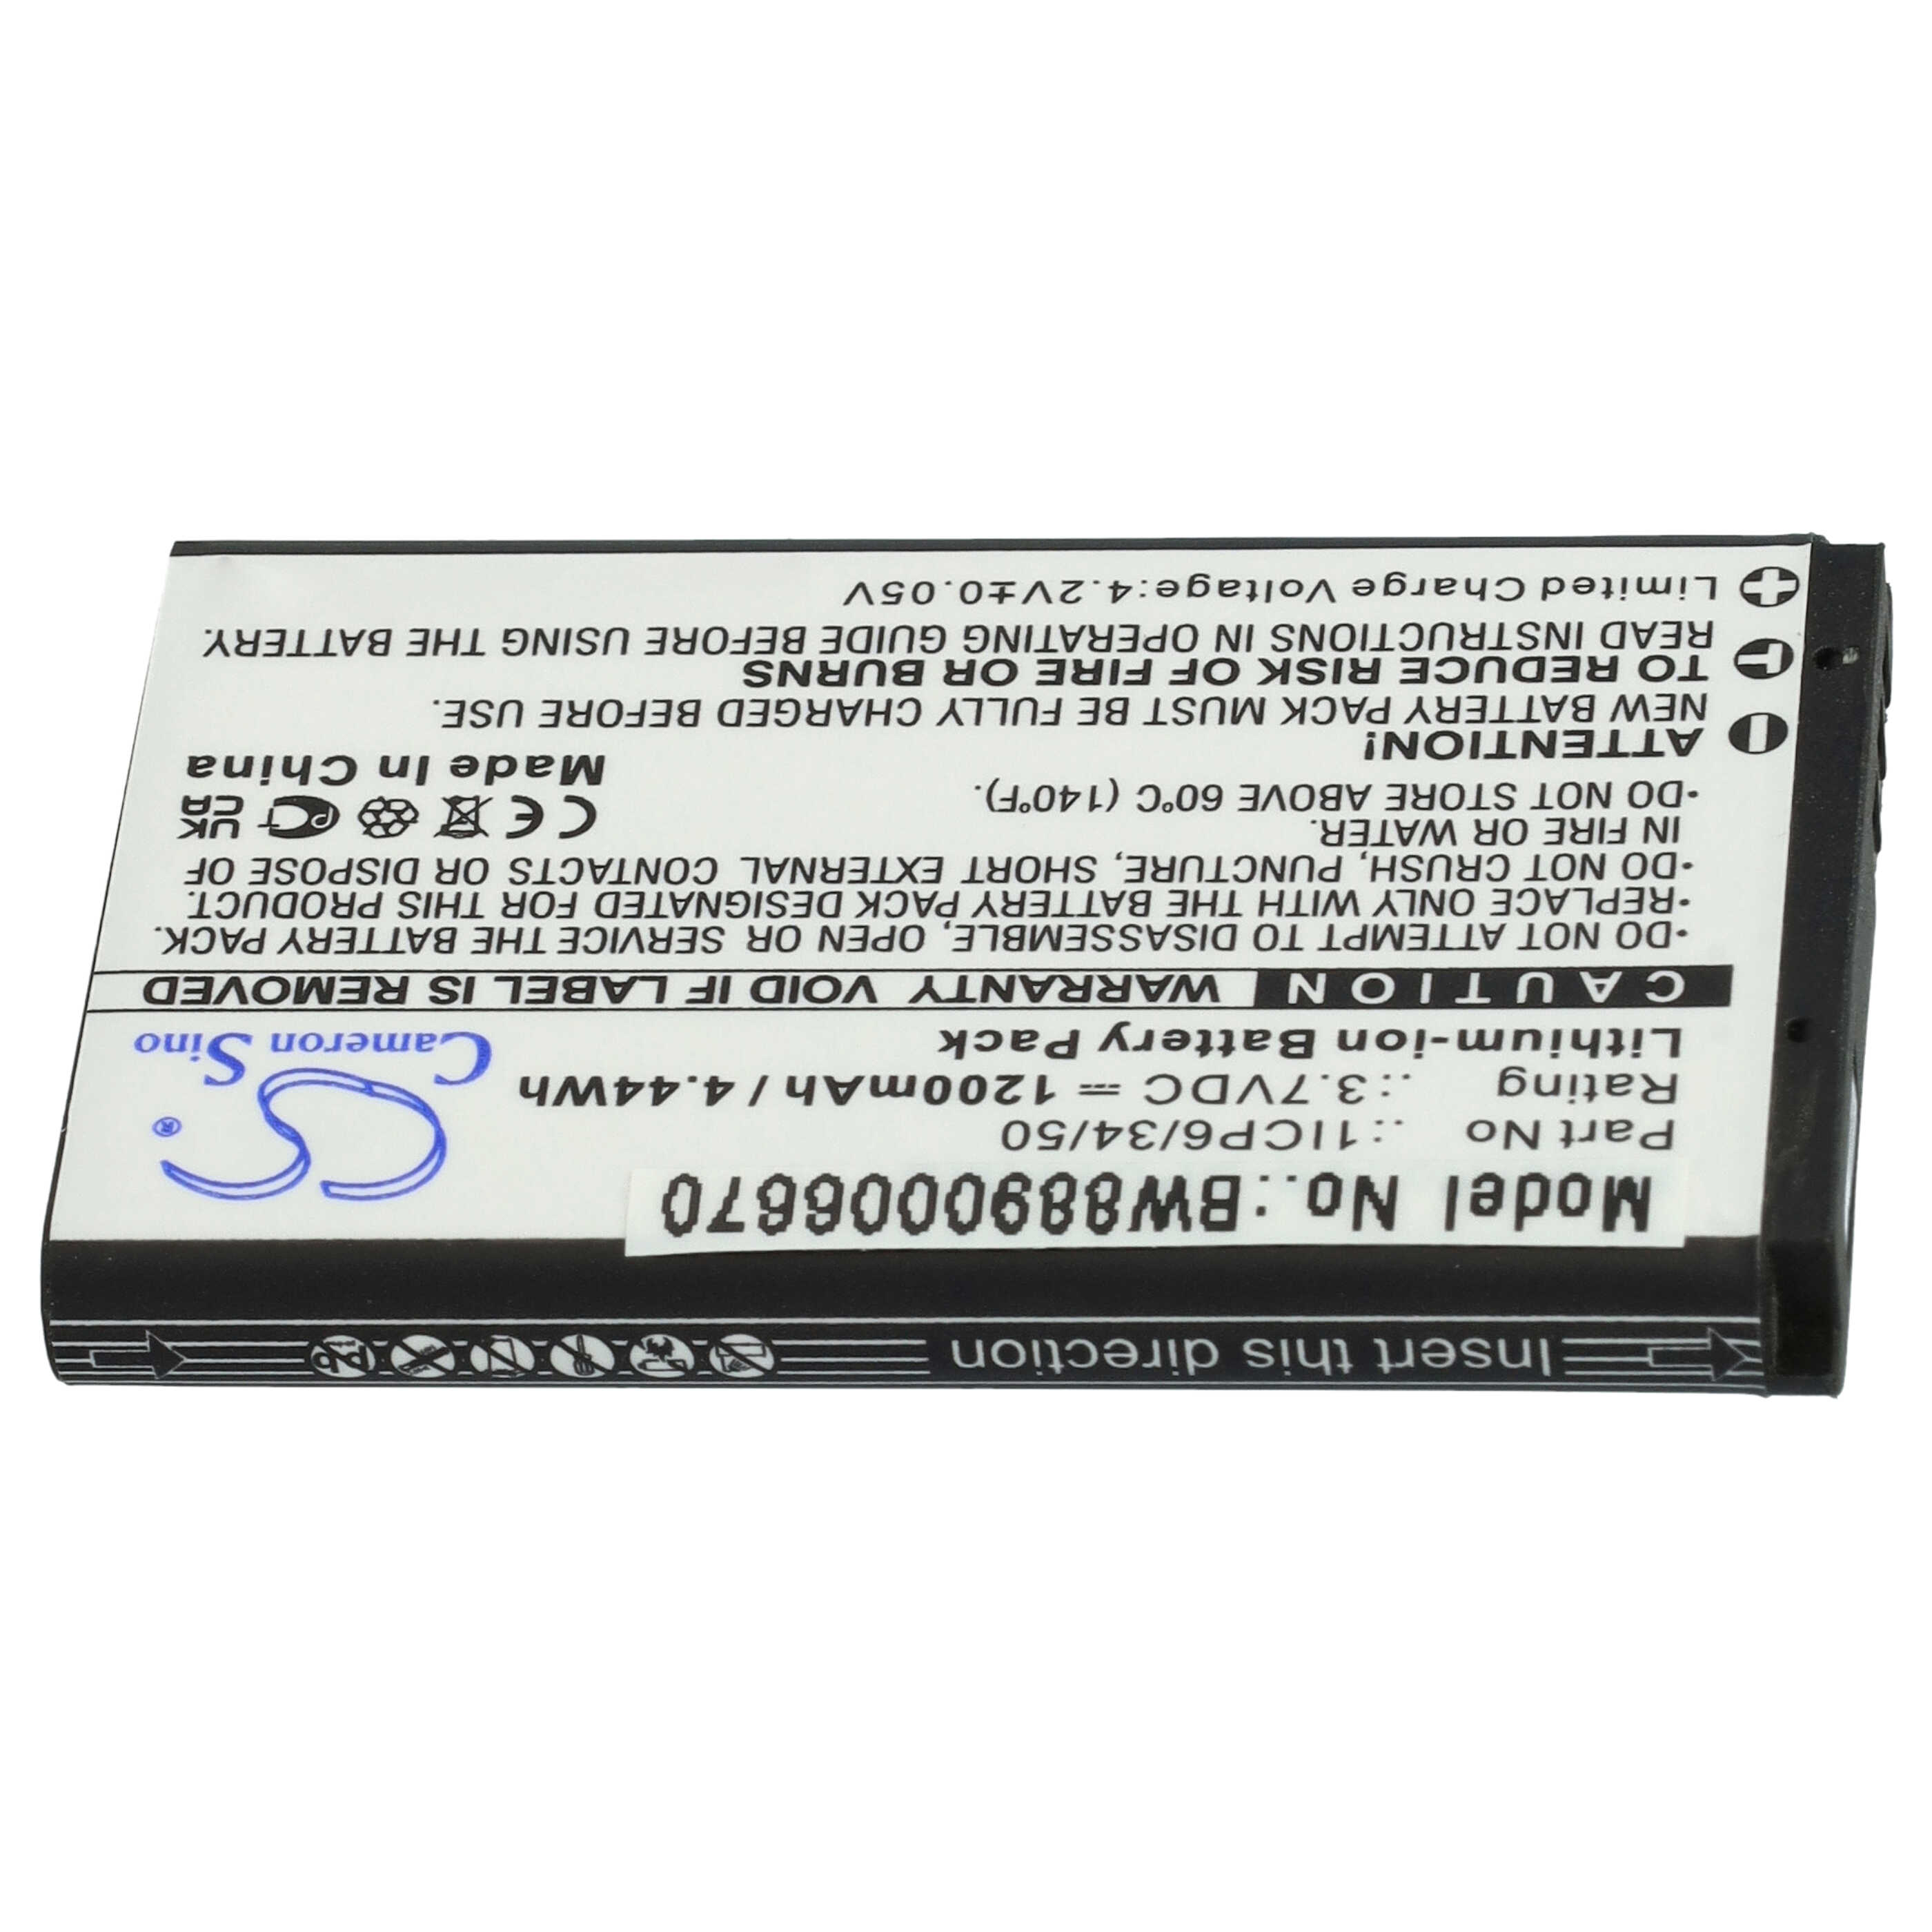 Akumulator do niani elektronicznej zamiennik Babymoov 1ICP6/34/50 - 1200 mAh 3,7 V Li-Ion